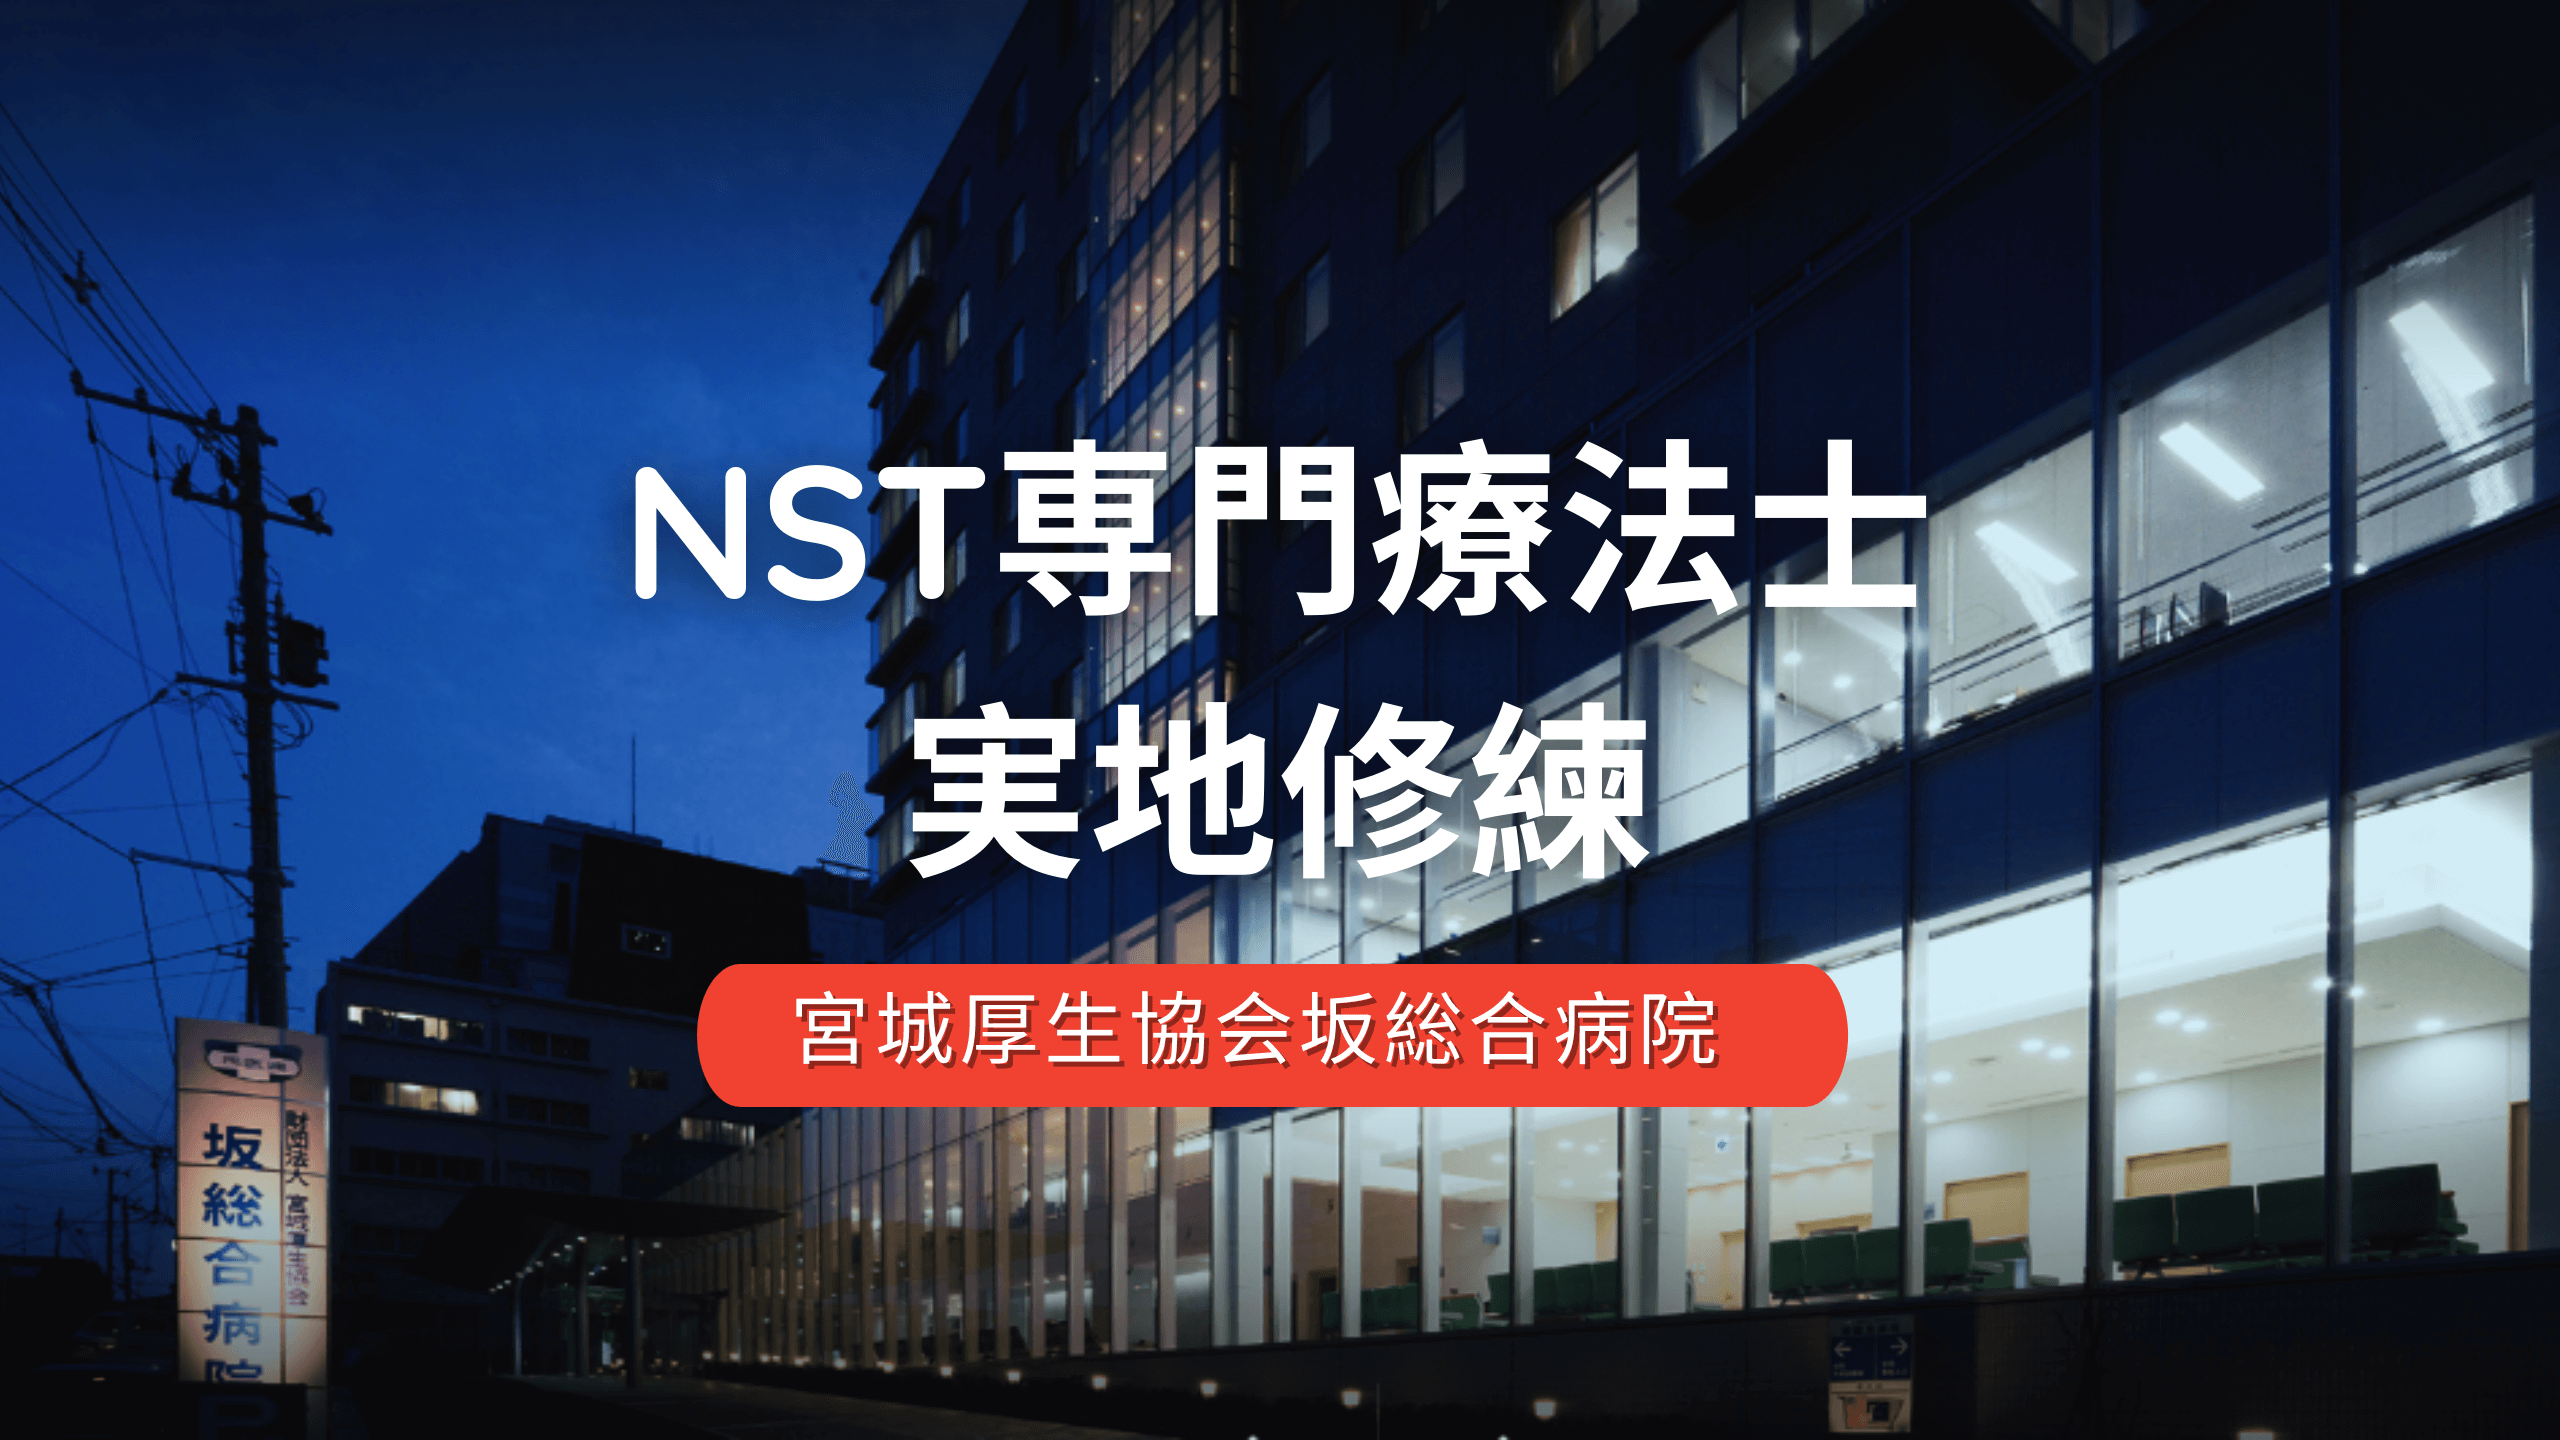 NST practical seminar